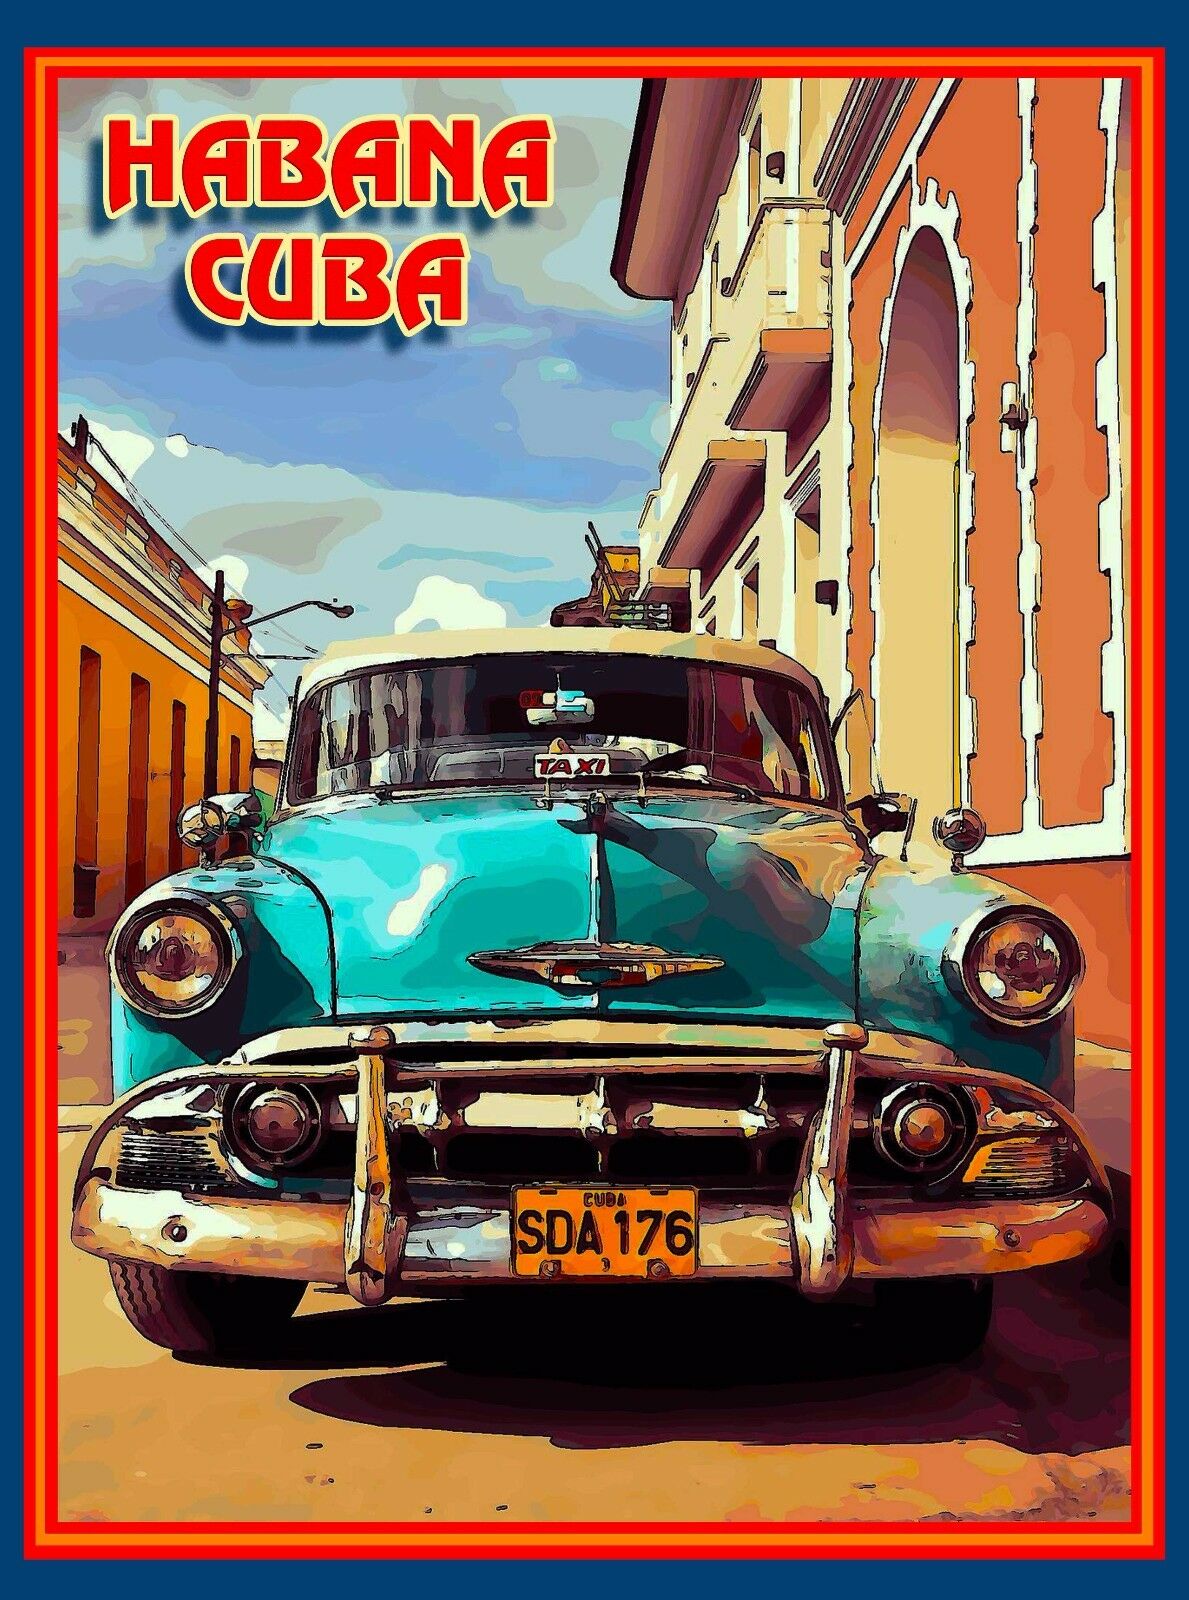 Cuba Cuban Havana Island Habana Caribbean Travel Art Advertisement Poster